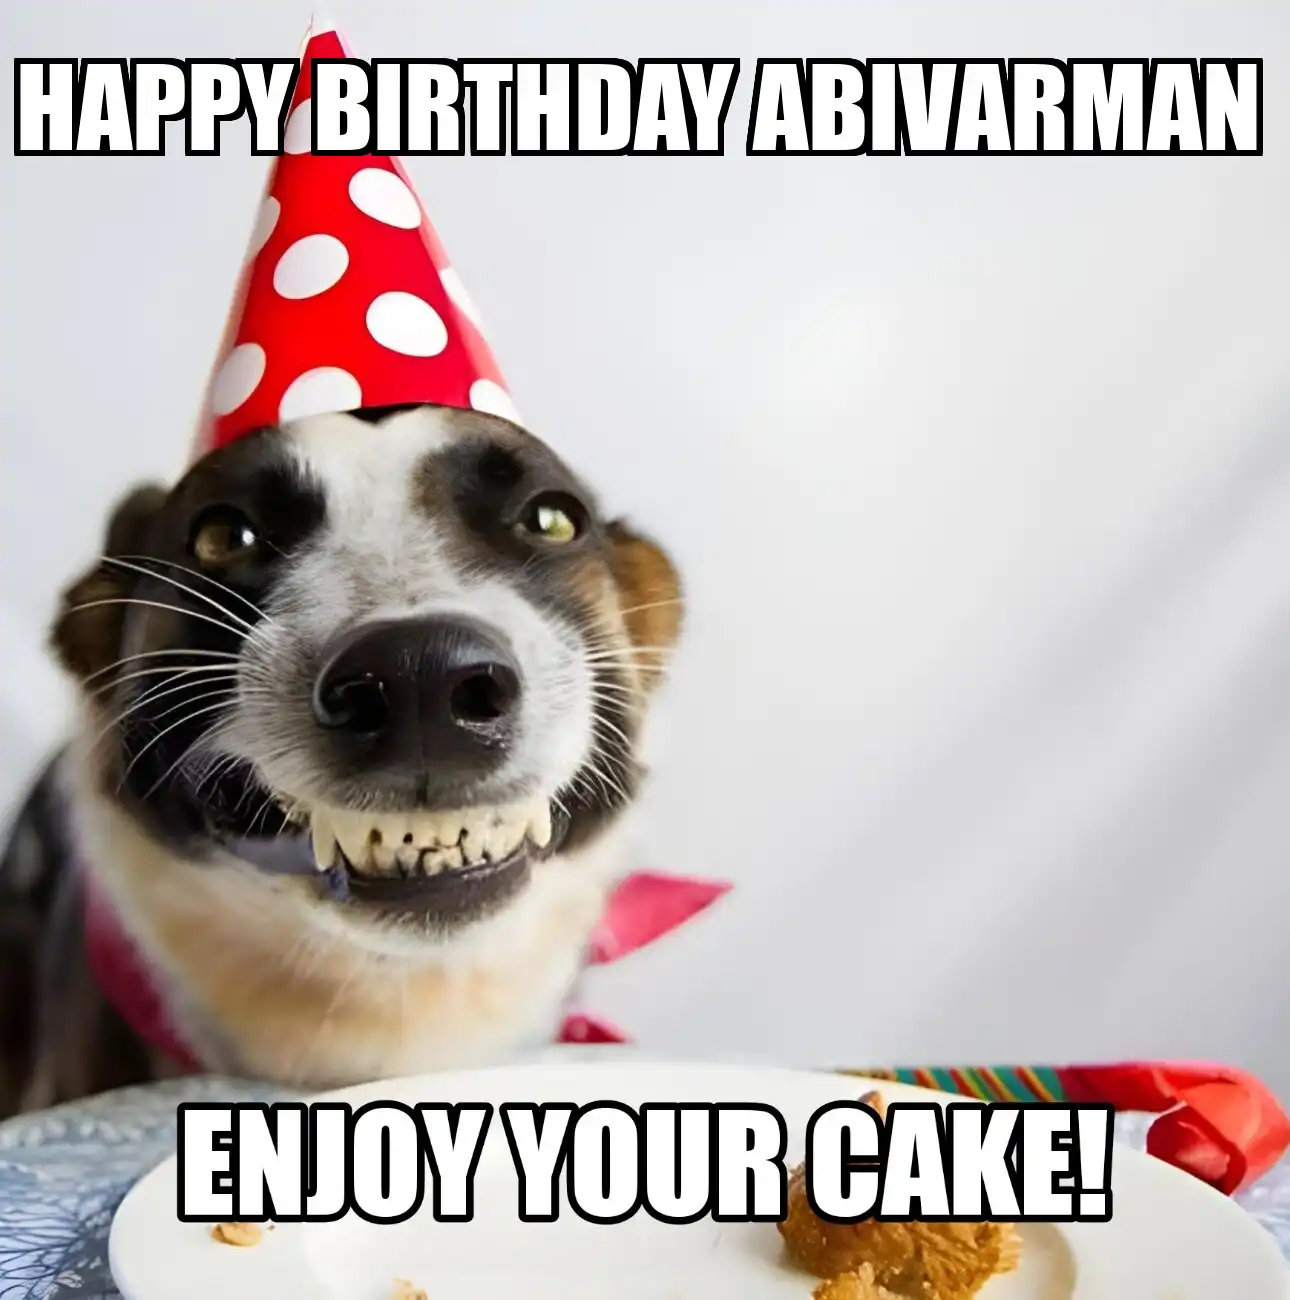 Happy Birthday Abivarman Enjoy Your Cake Dog Meme